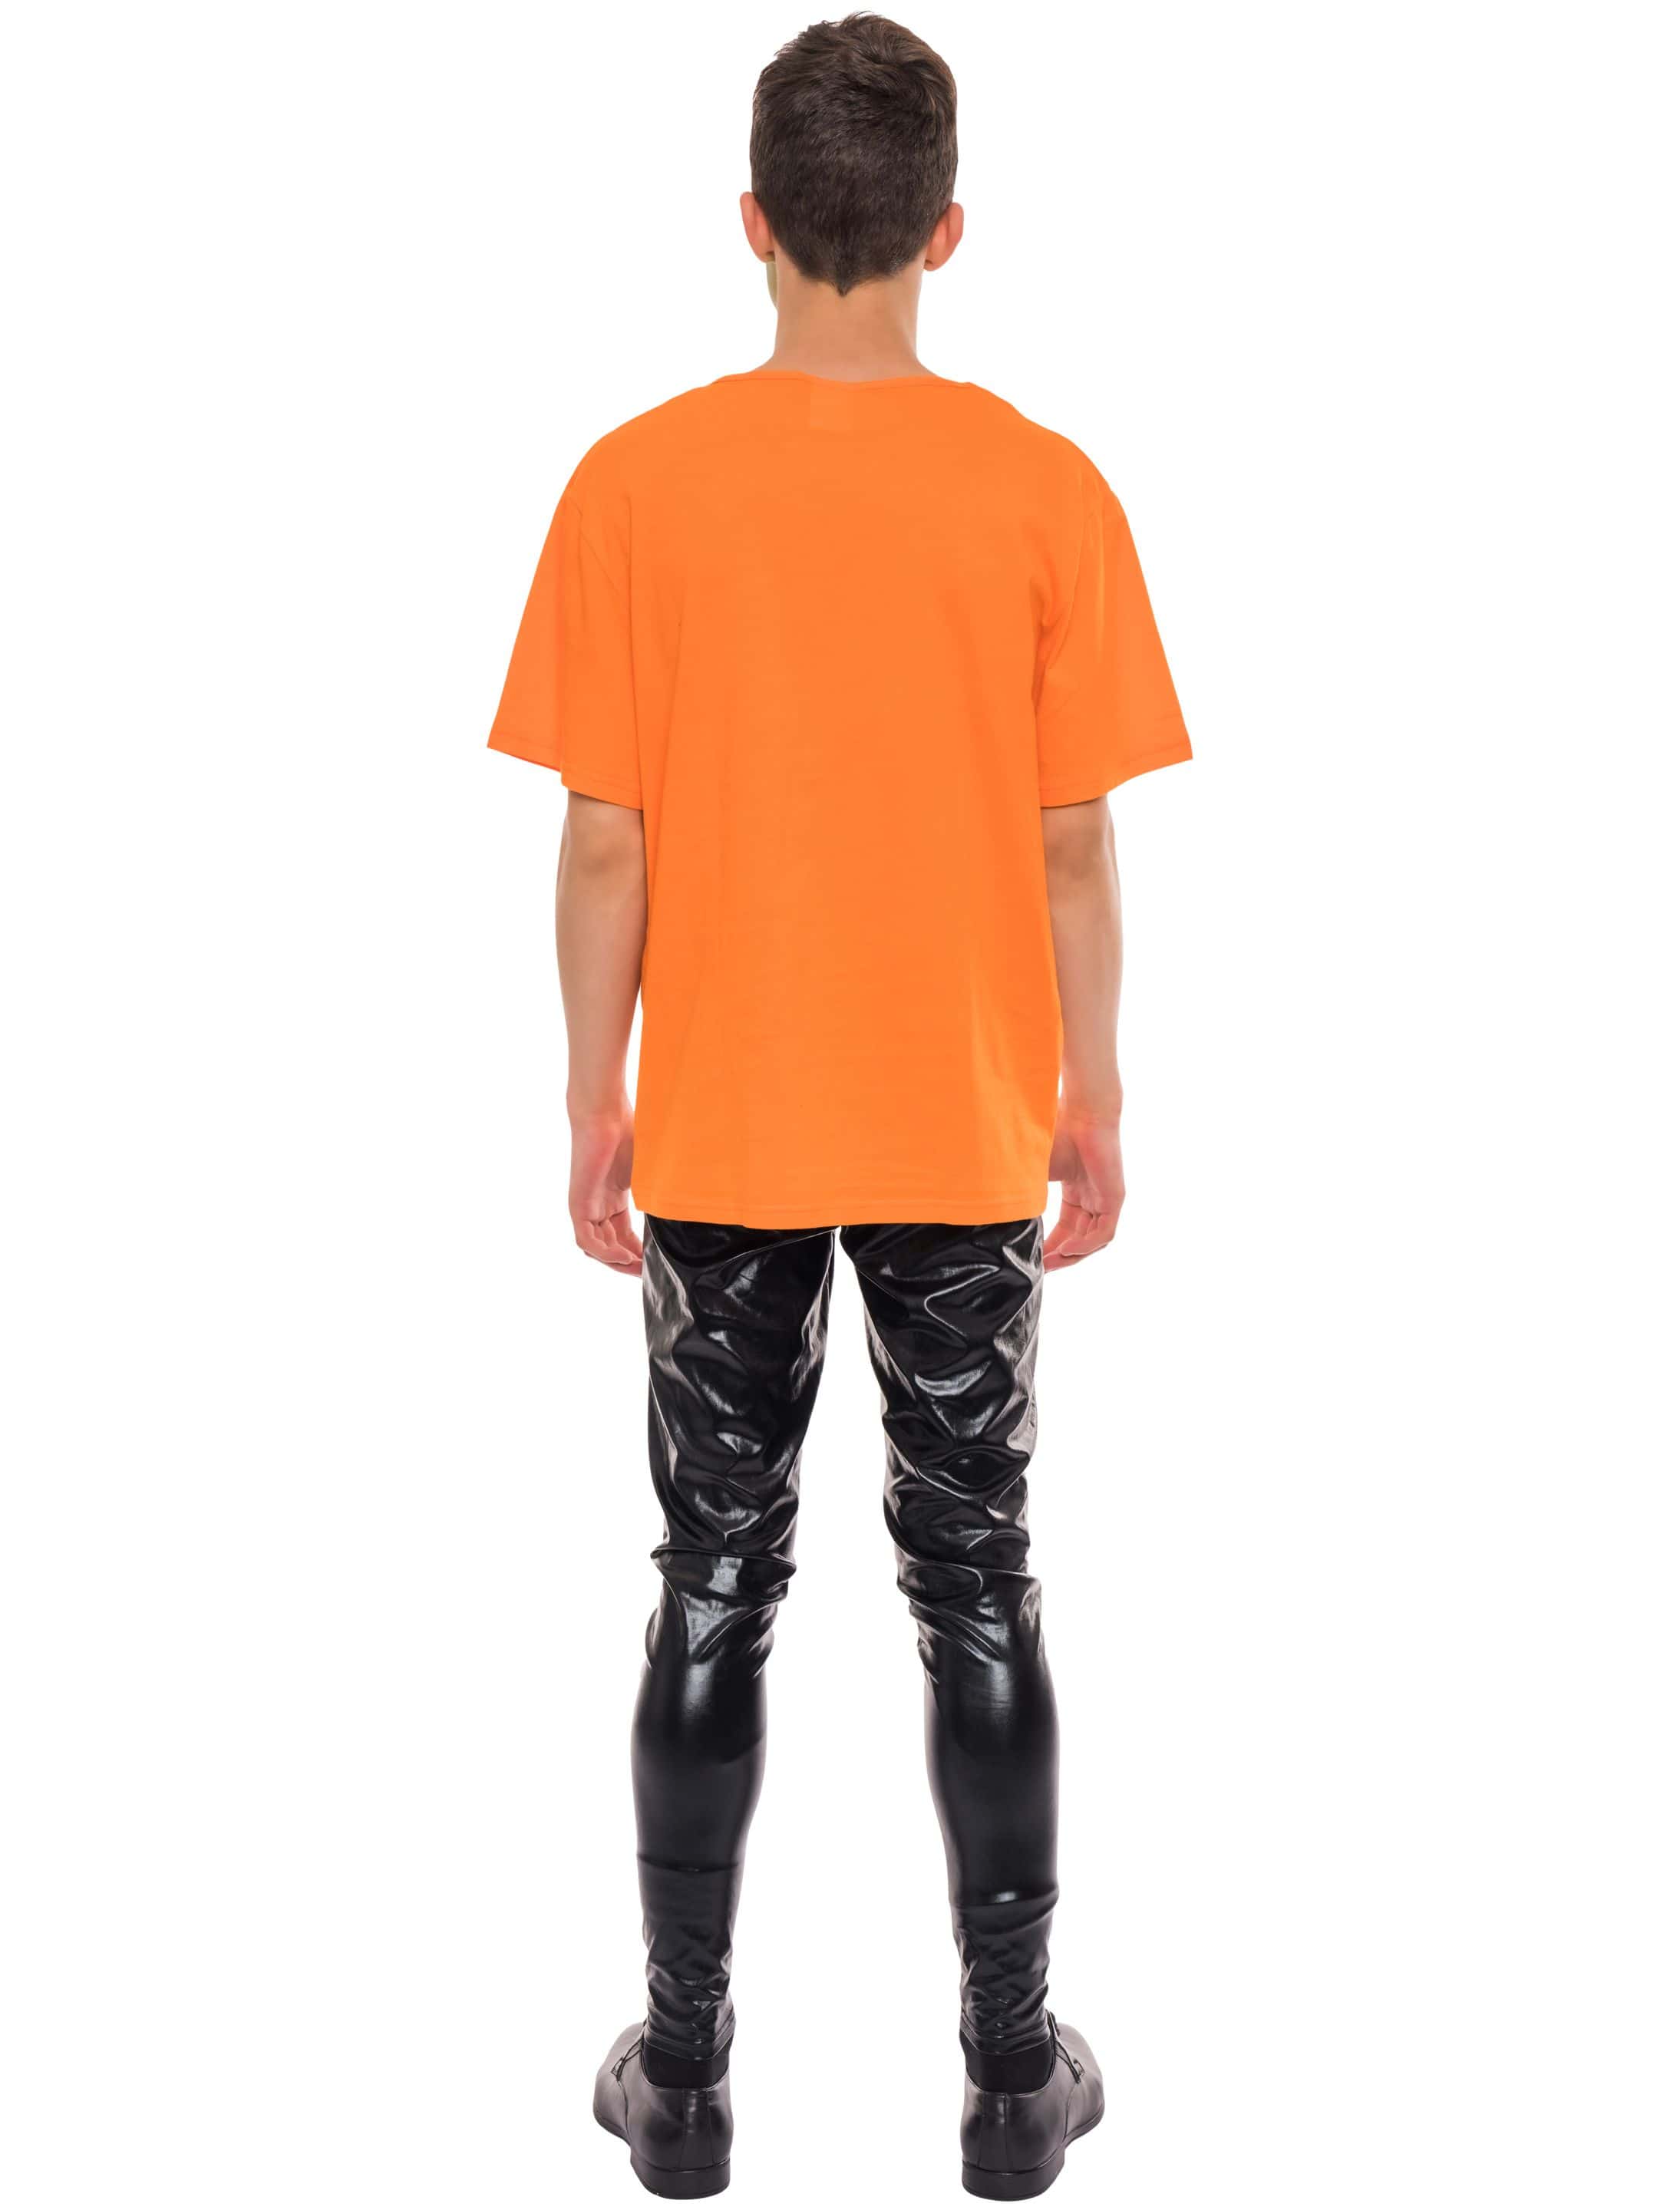 T-Shirt Halloween Kürbis orange 2XL/3XL